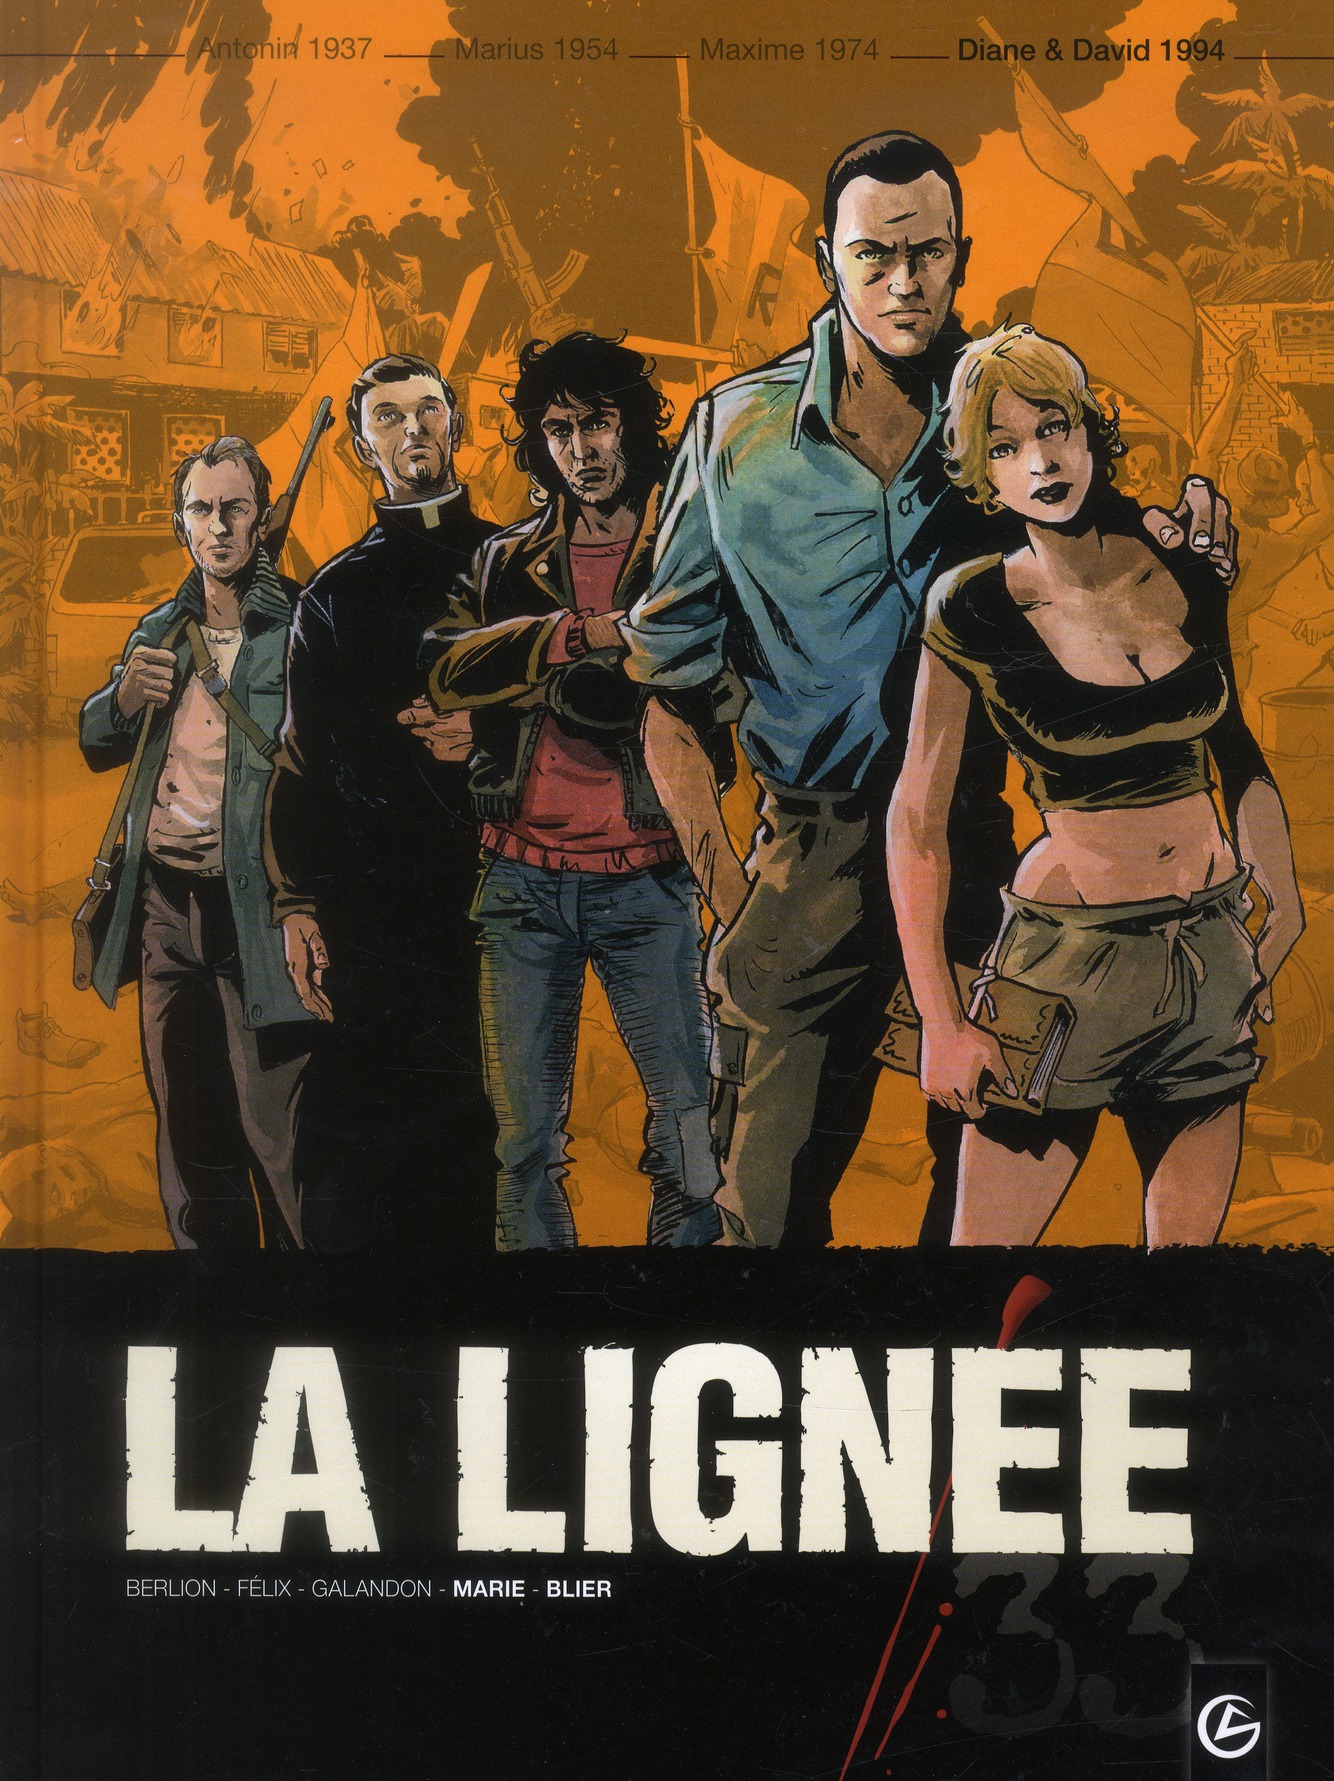 LA LIGNEE - VOL. 04/4 - DIANE ET DAVID 1994